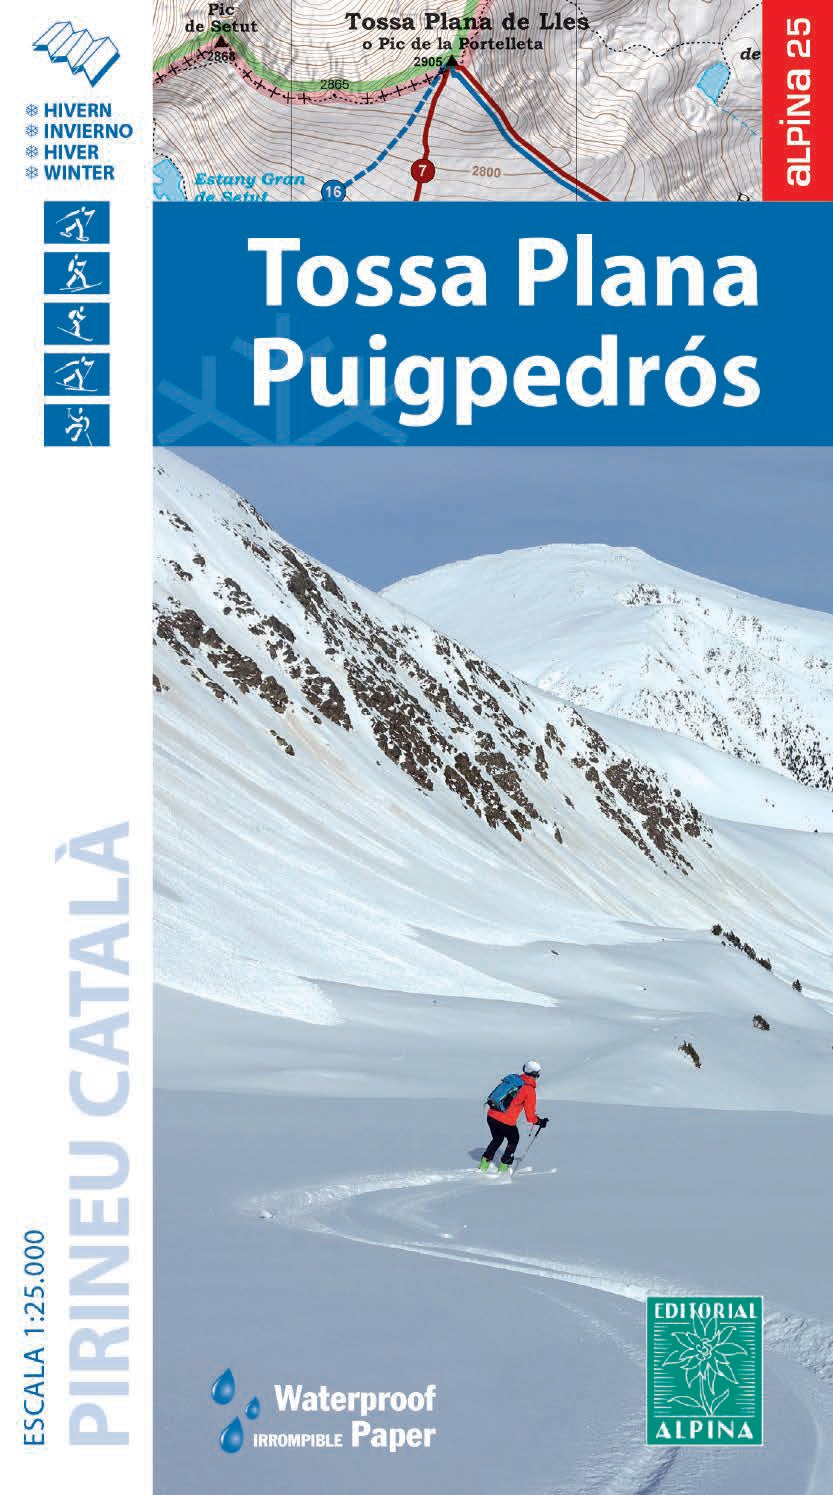 Carte de randonnée hivernale - Tossa Plana, Puigpedros (Pyrénées Catalanes) | Alpina carte pliée Editorial Alpina 